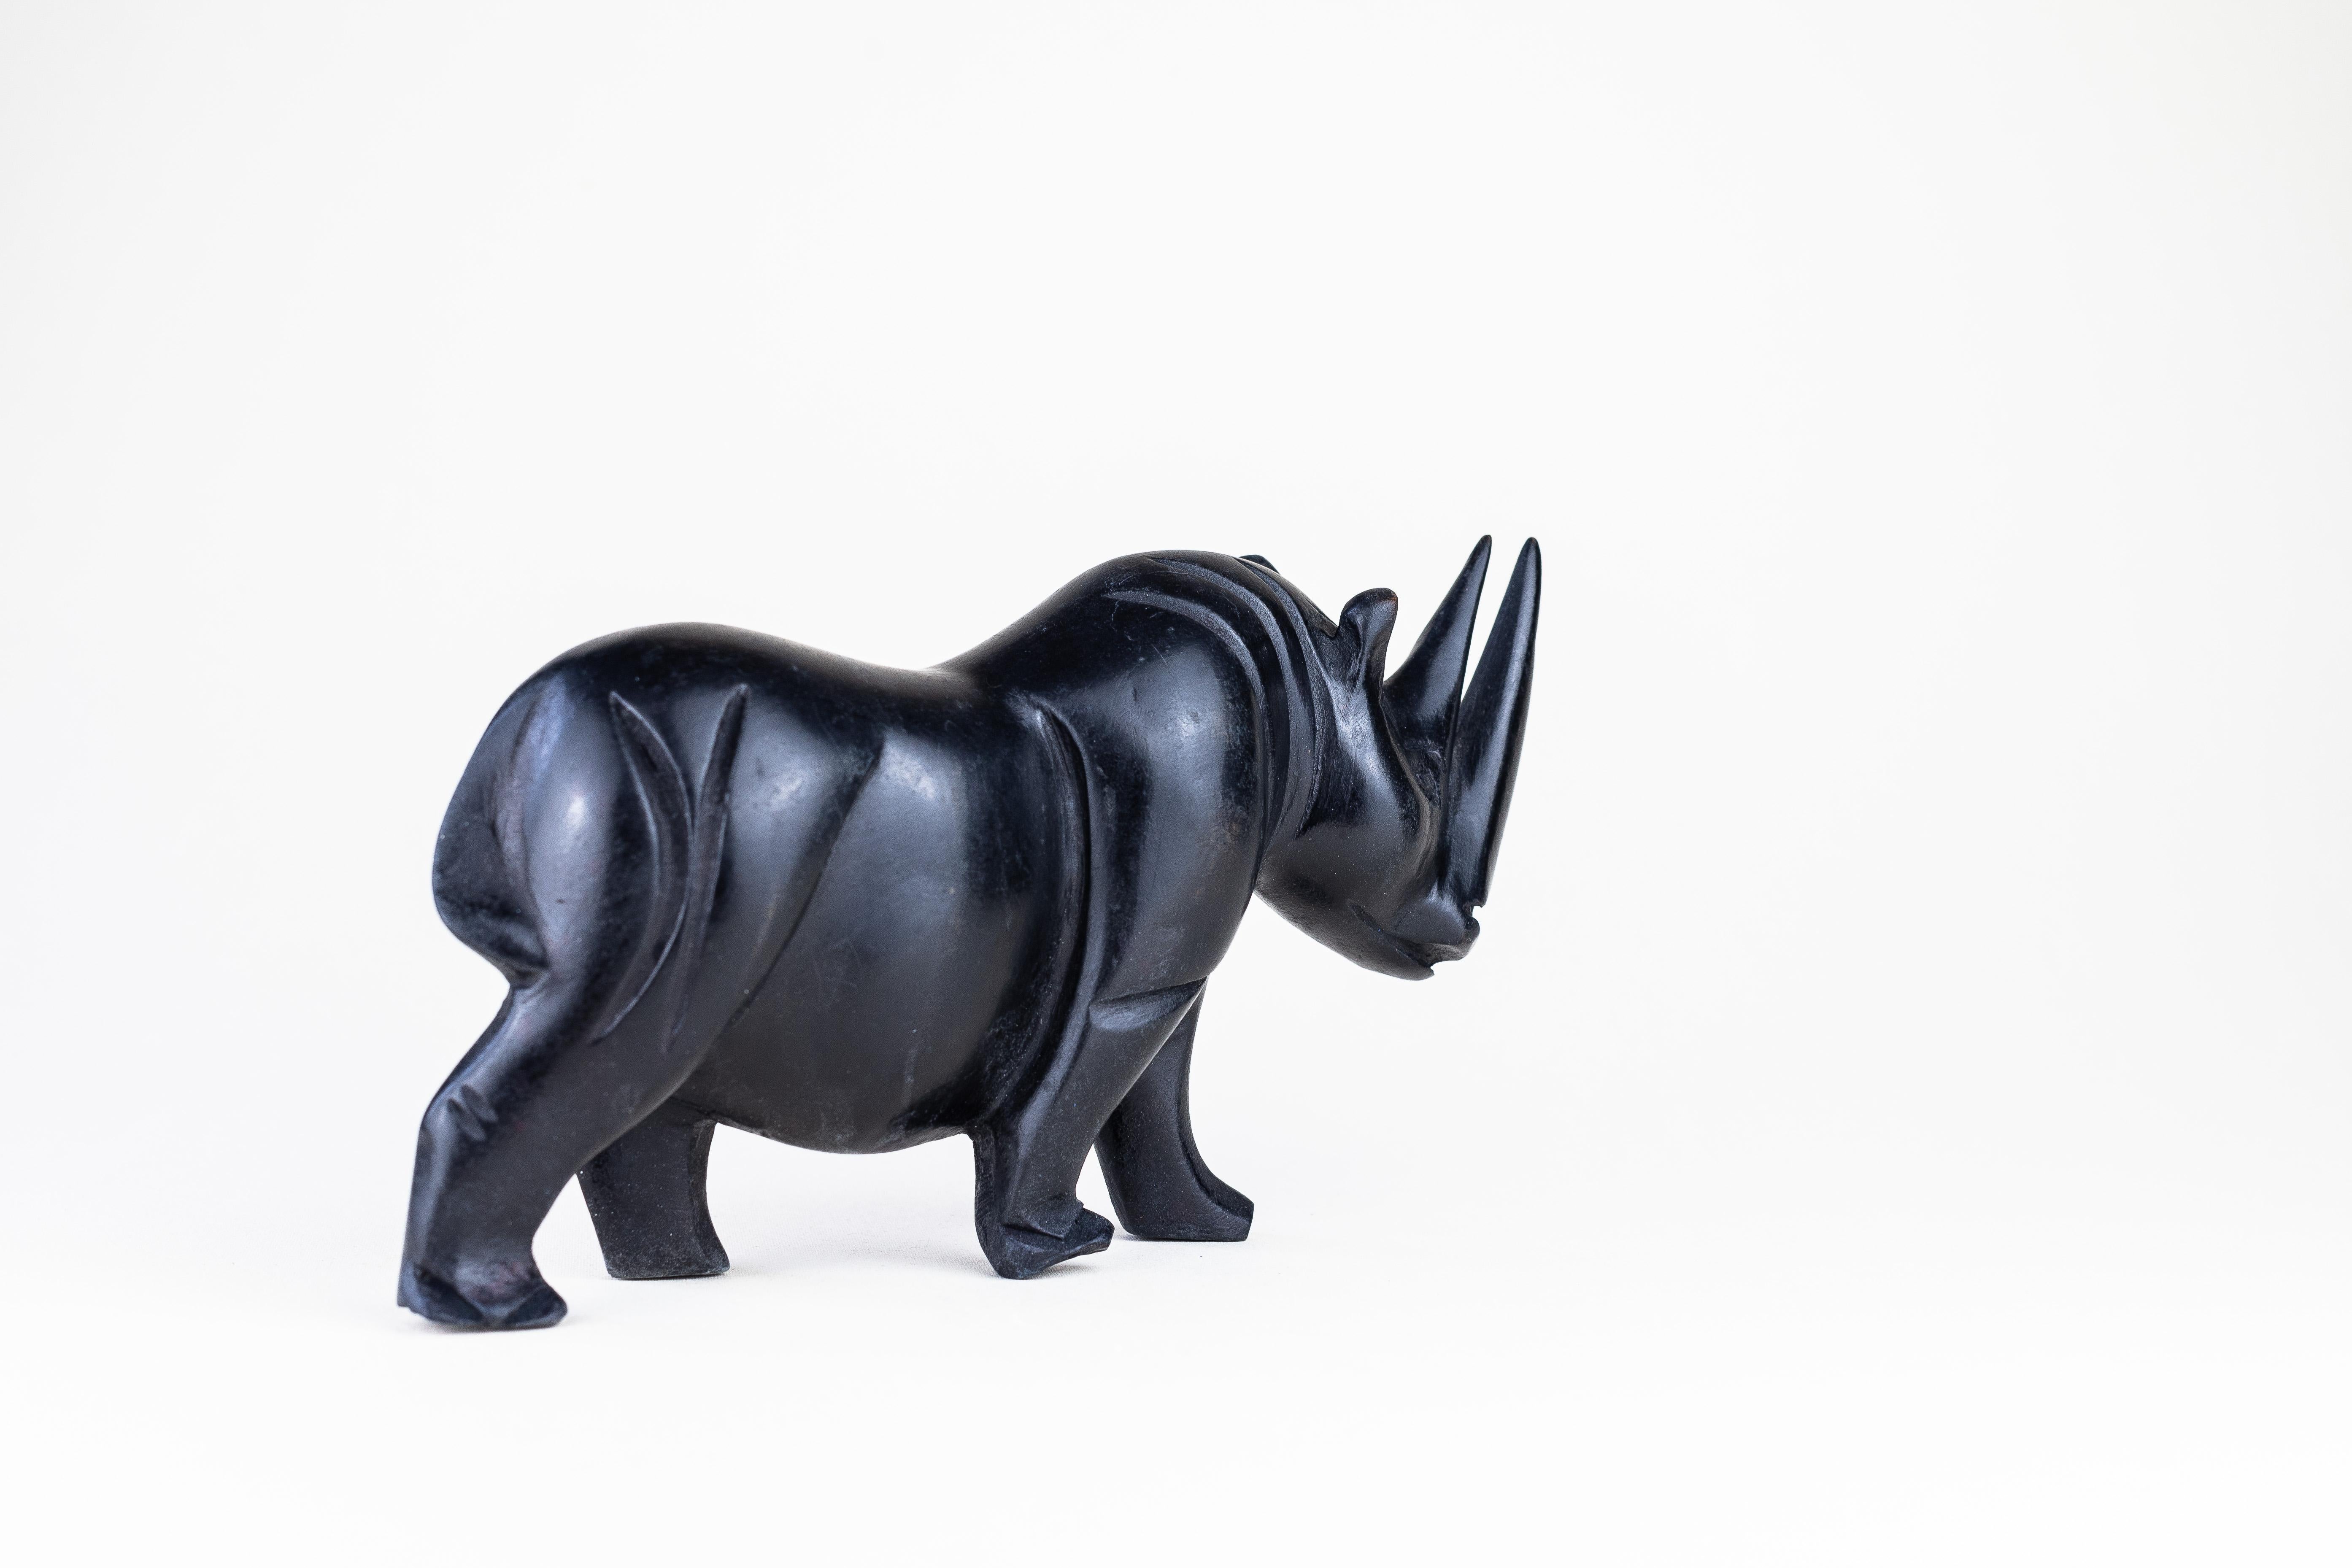 Blackened Ebonized Rhinoceros Wood sculpture For Sale